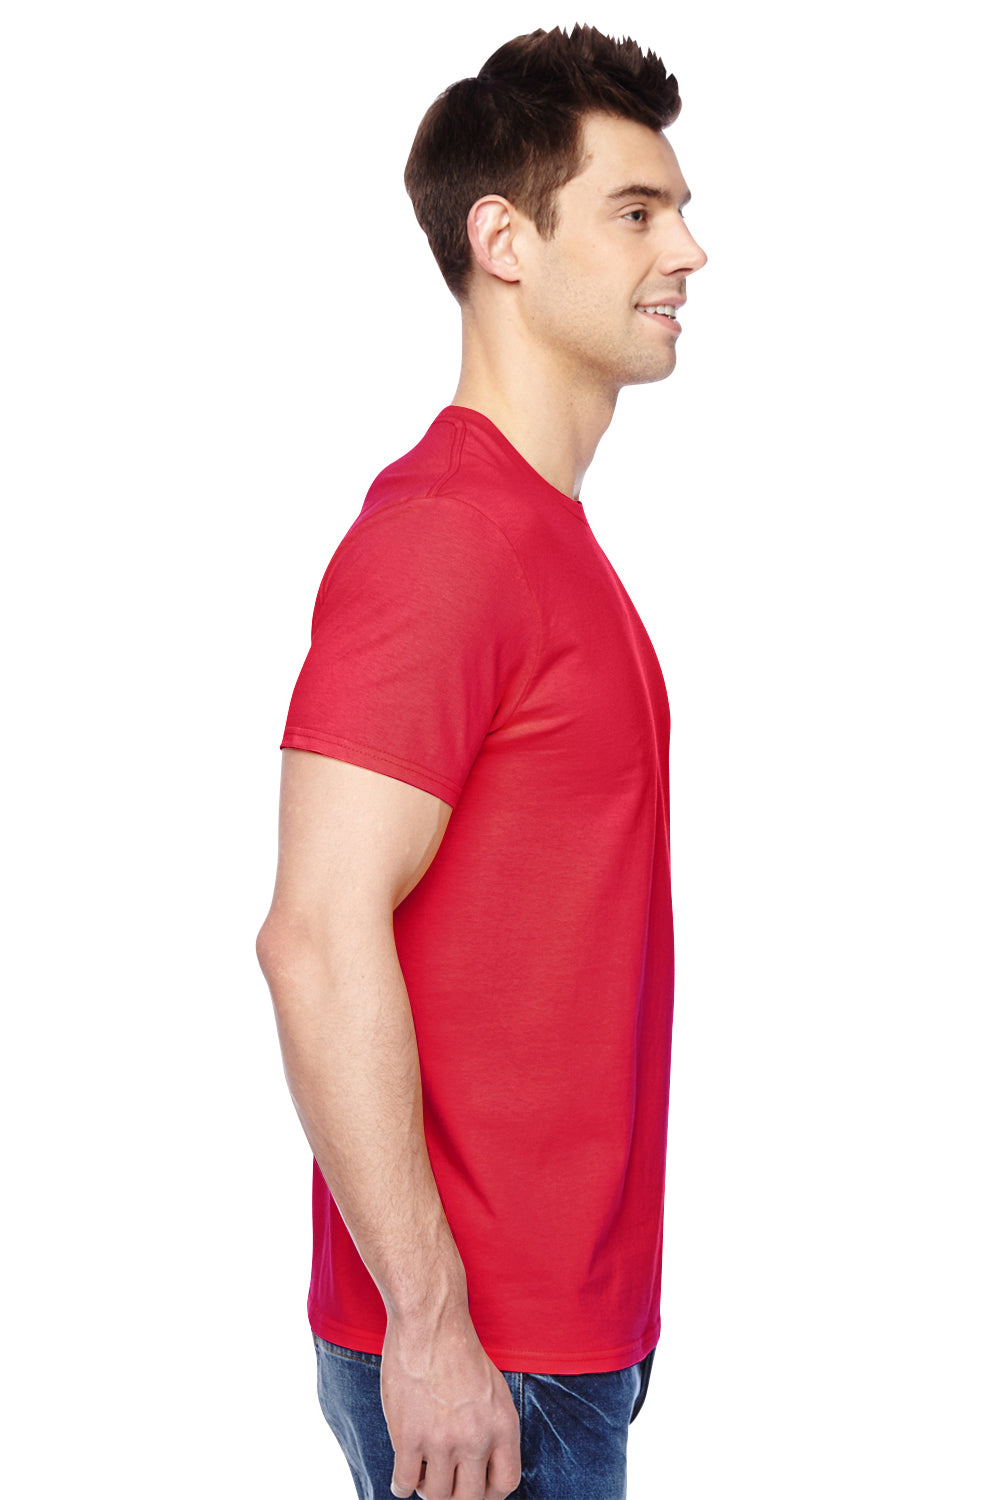 Fruit Of The Loom SF45R Mens Sofspun Jersey Short Sleeve Crewneck T-Shirt Fiery Red Side